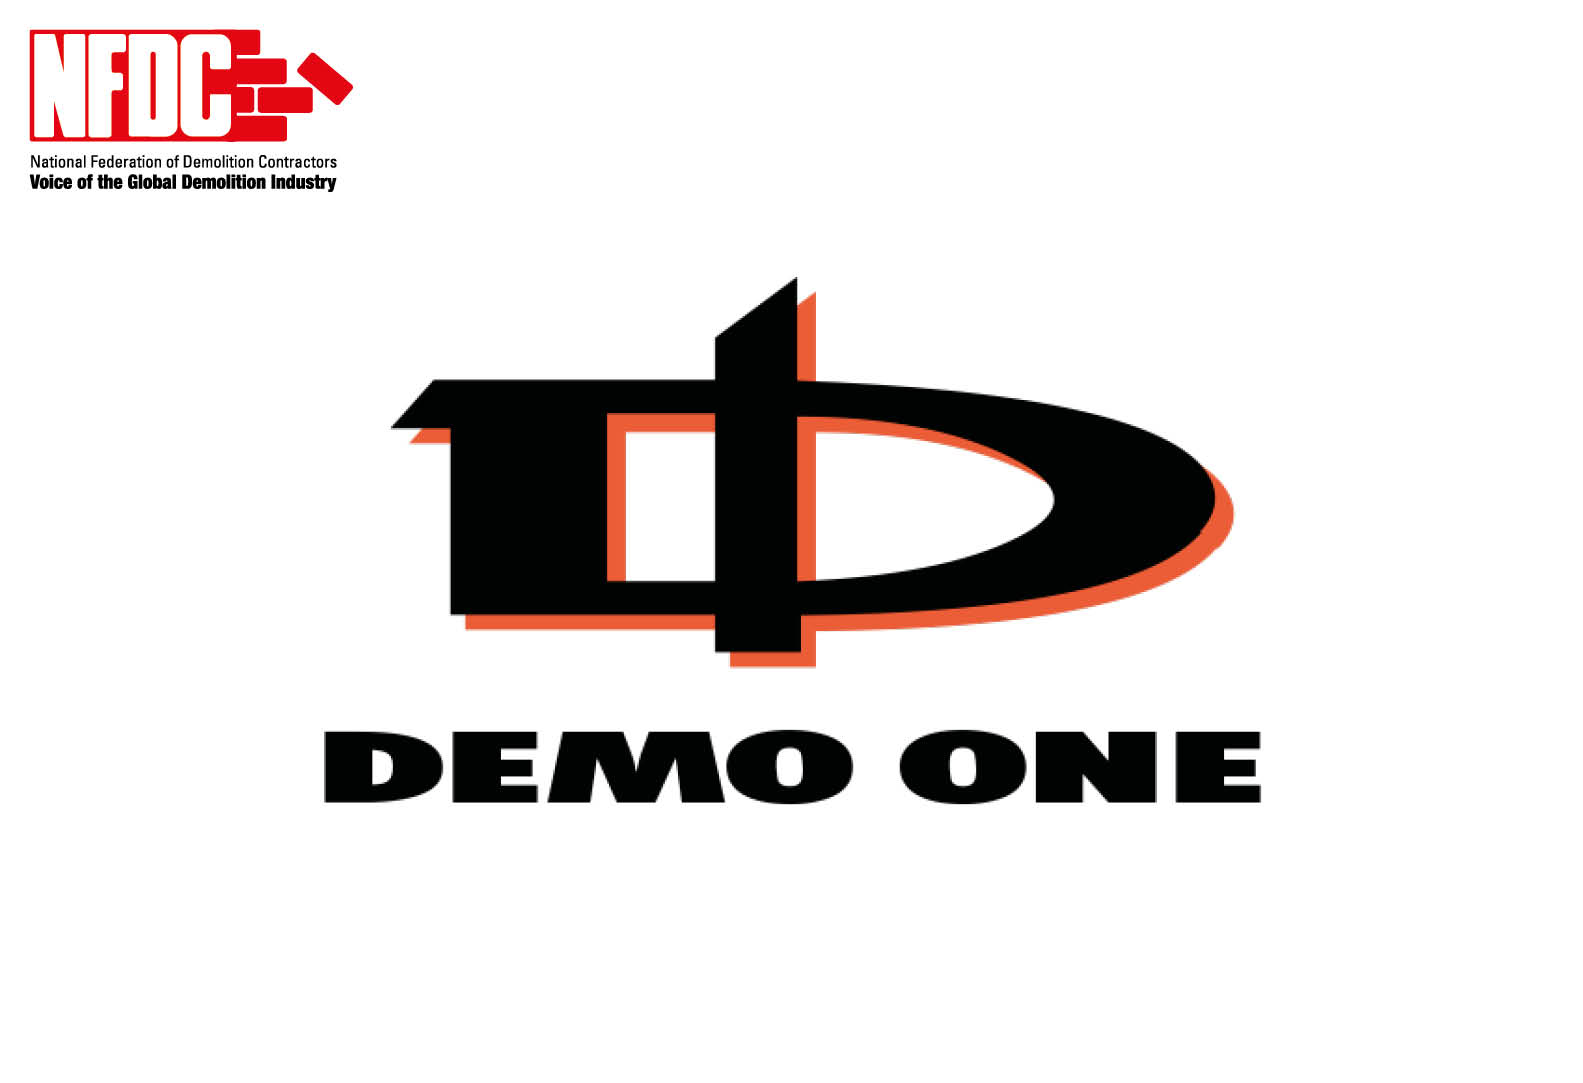 Demo One Ltd